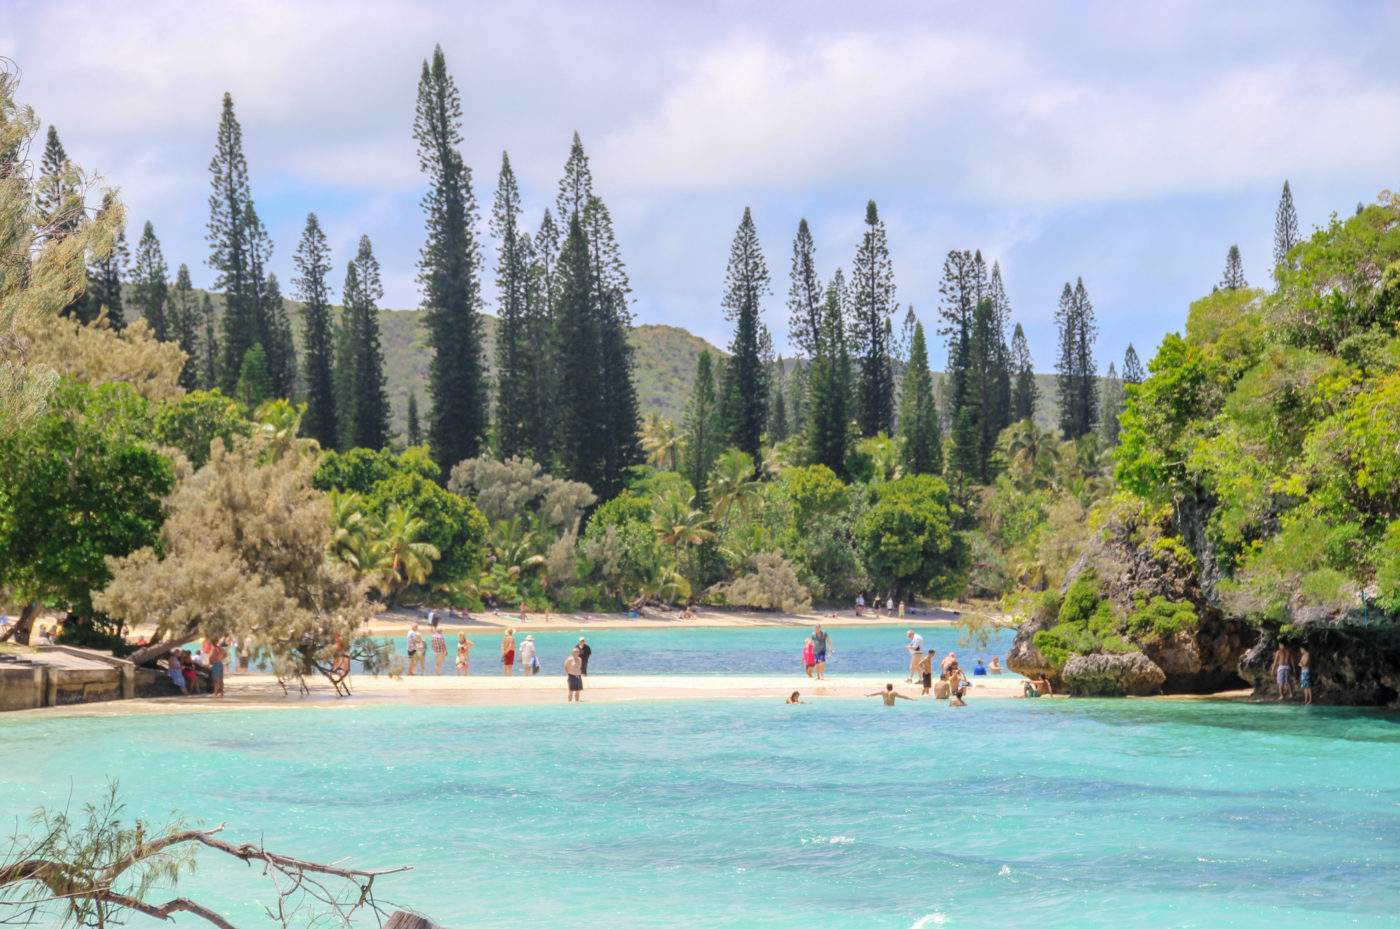 Isle de Pines, New Caledonia – “The Closest Island to Paradise”